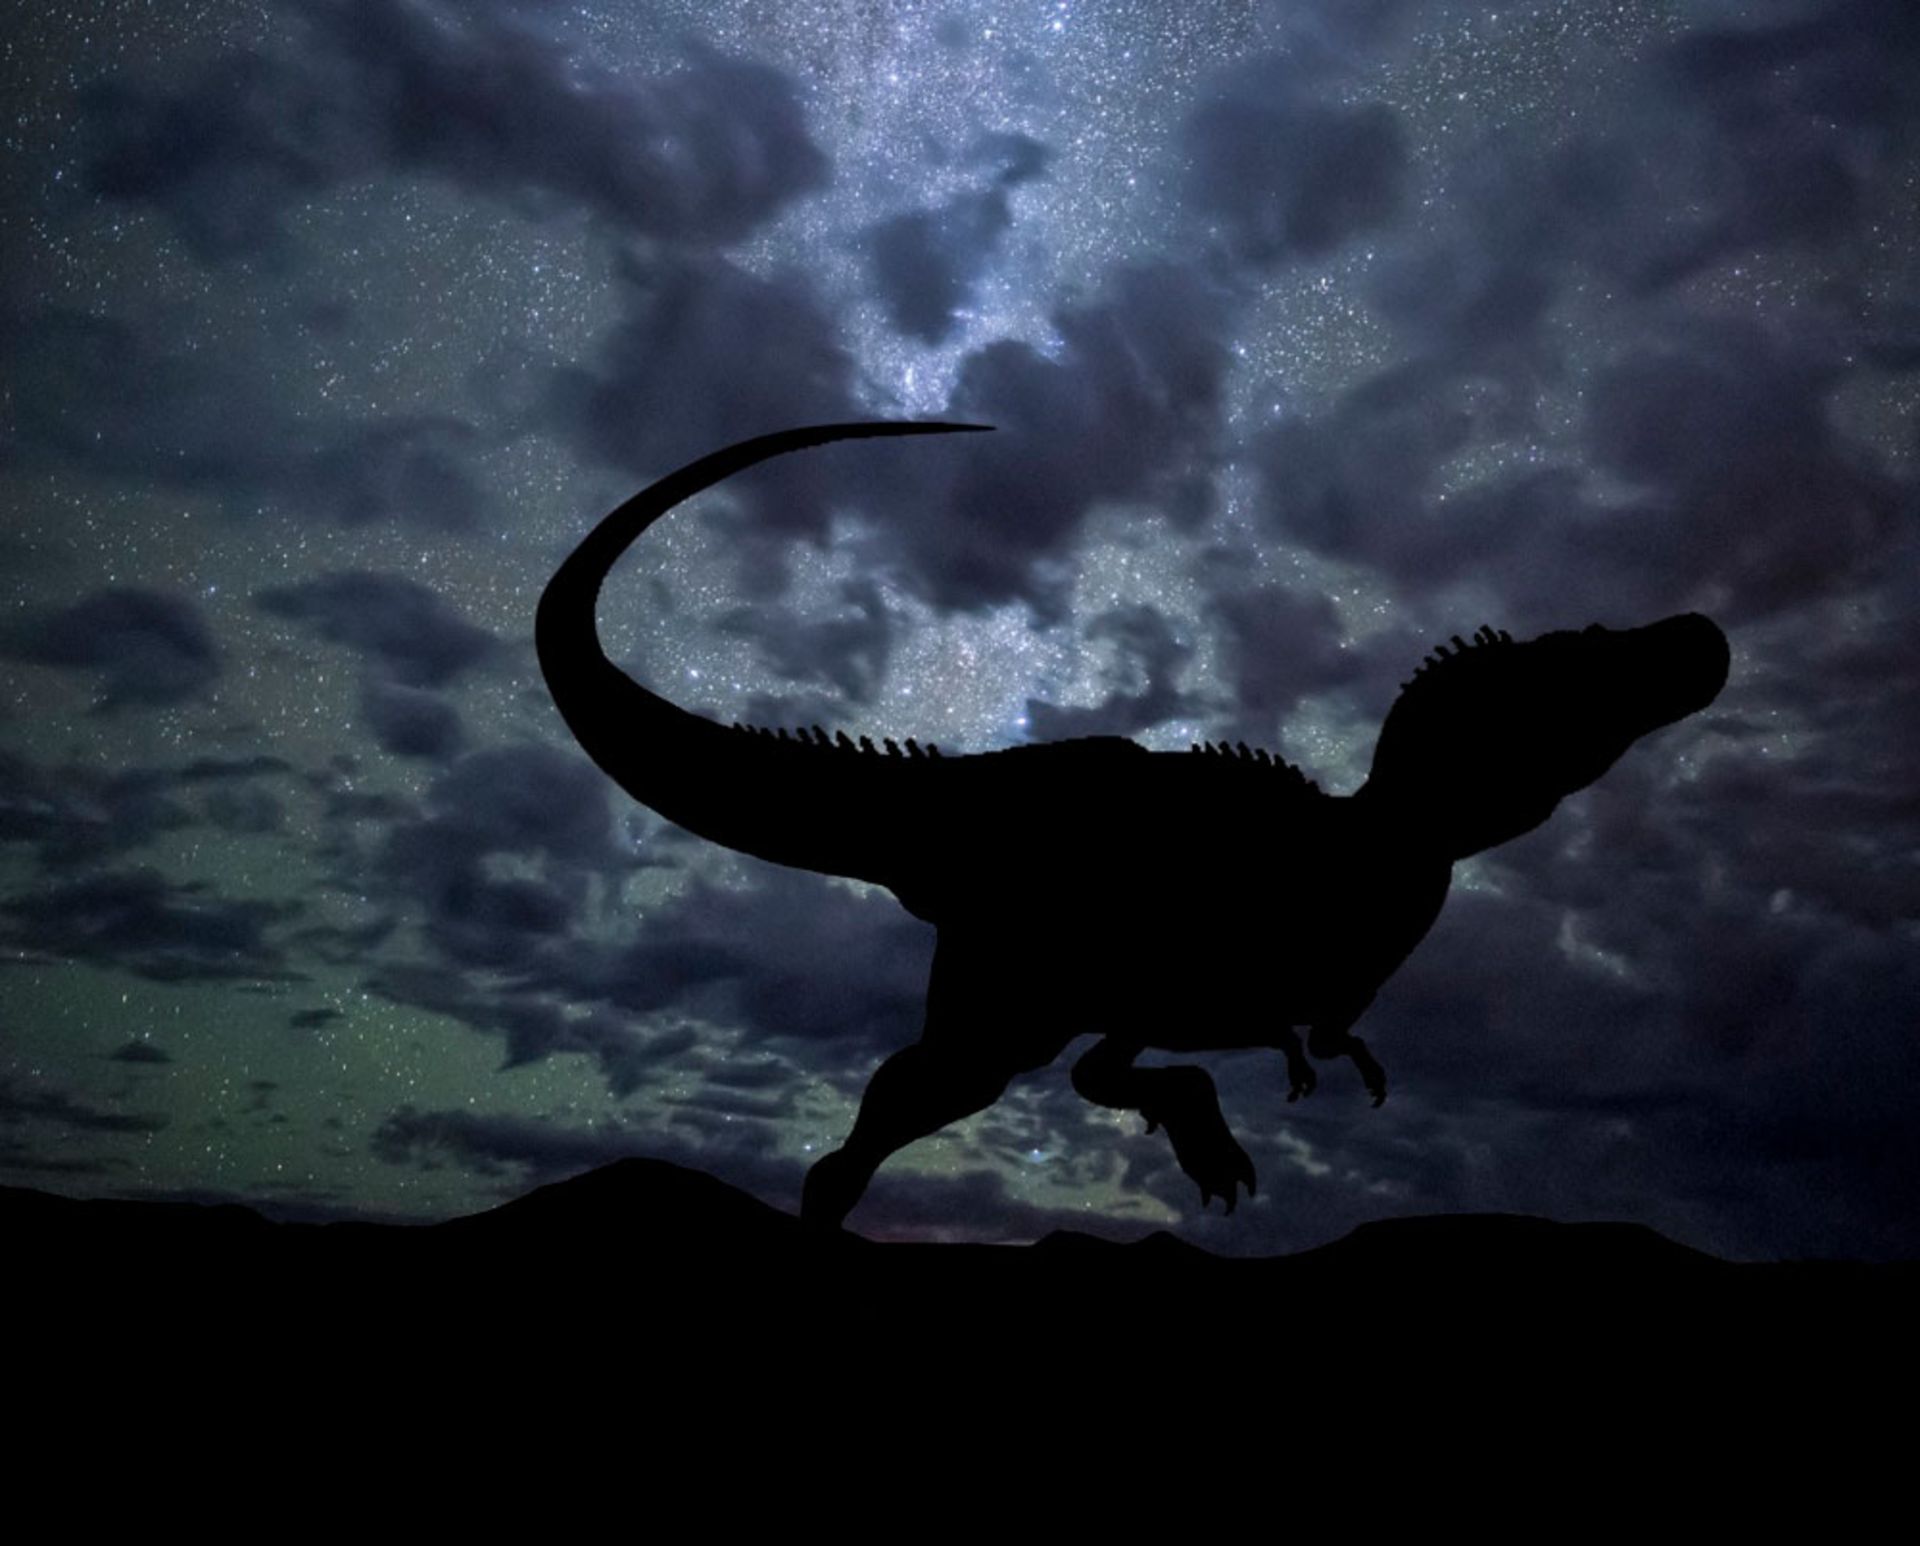 دایناسور در مقابل آسمان شب